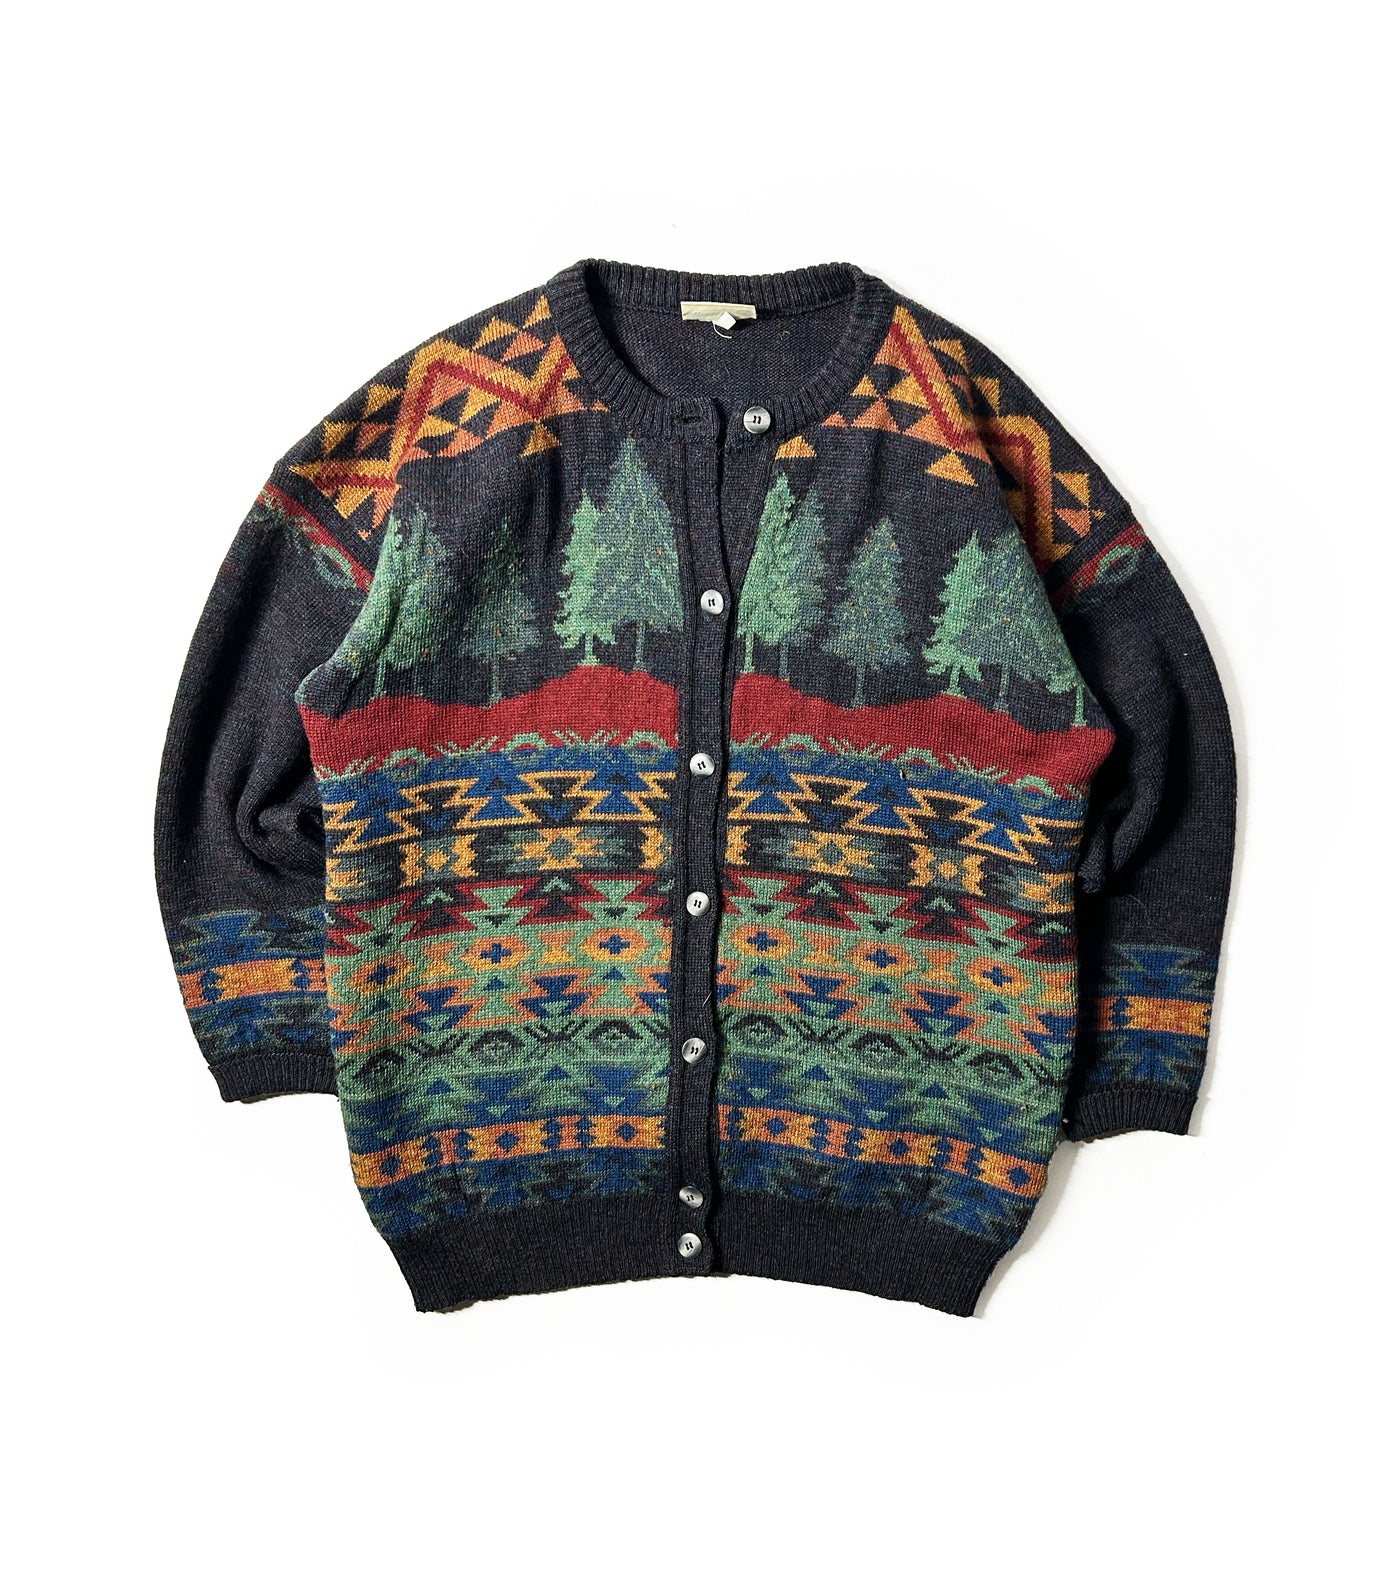 Vintage 90s Aztec Cardigan Sweater